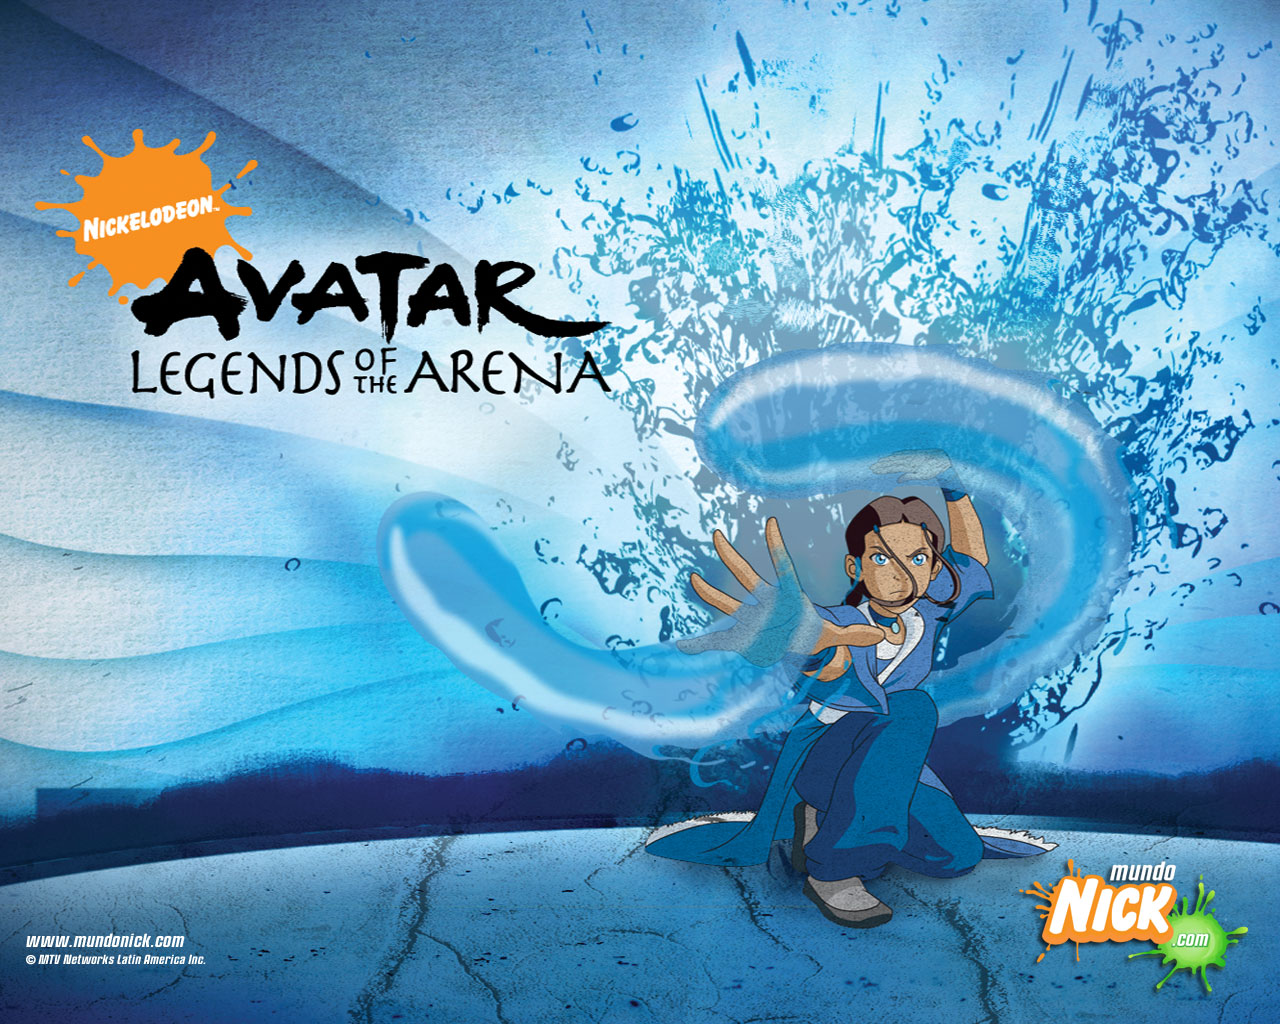 Wallpaper Katara Legends Of The Arena Estado Avatar La Leyenda De